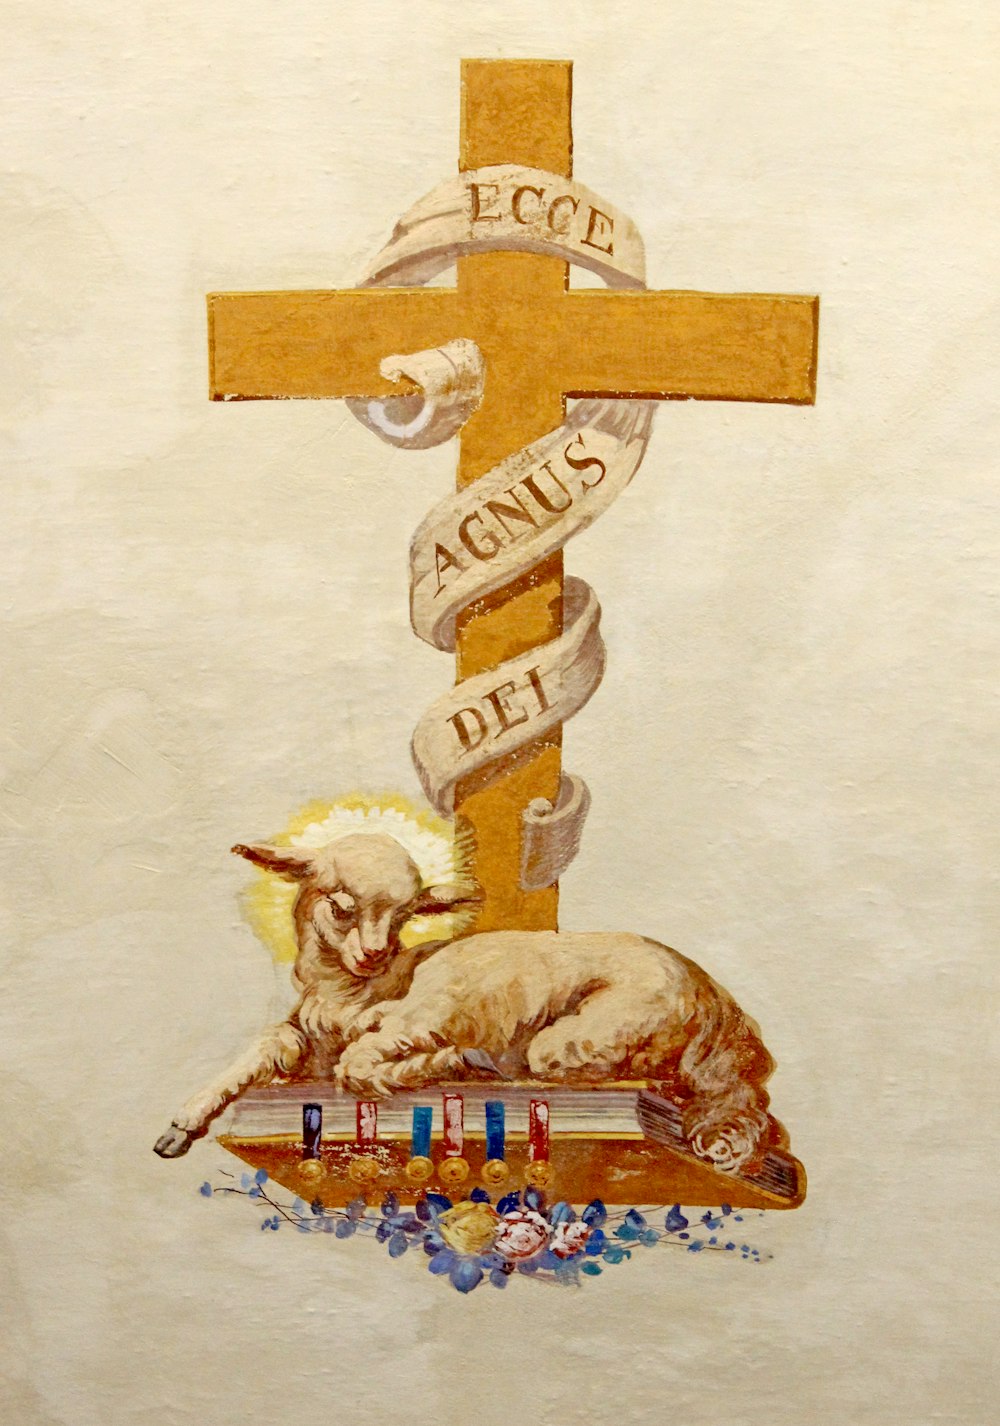 lamb on bible under cross illustration